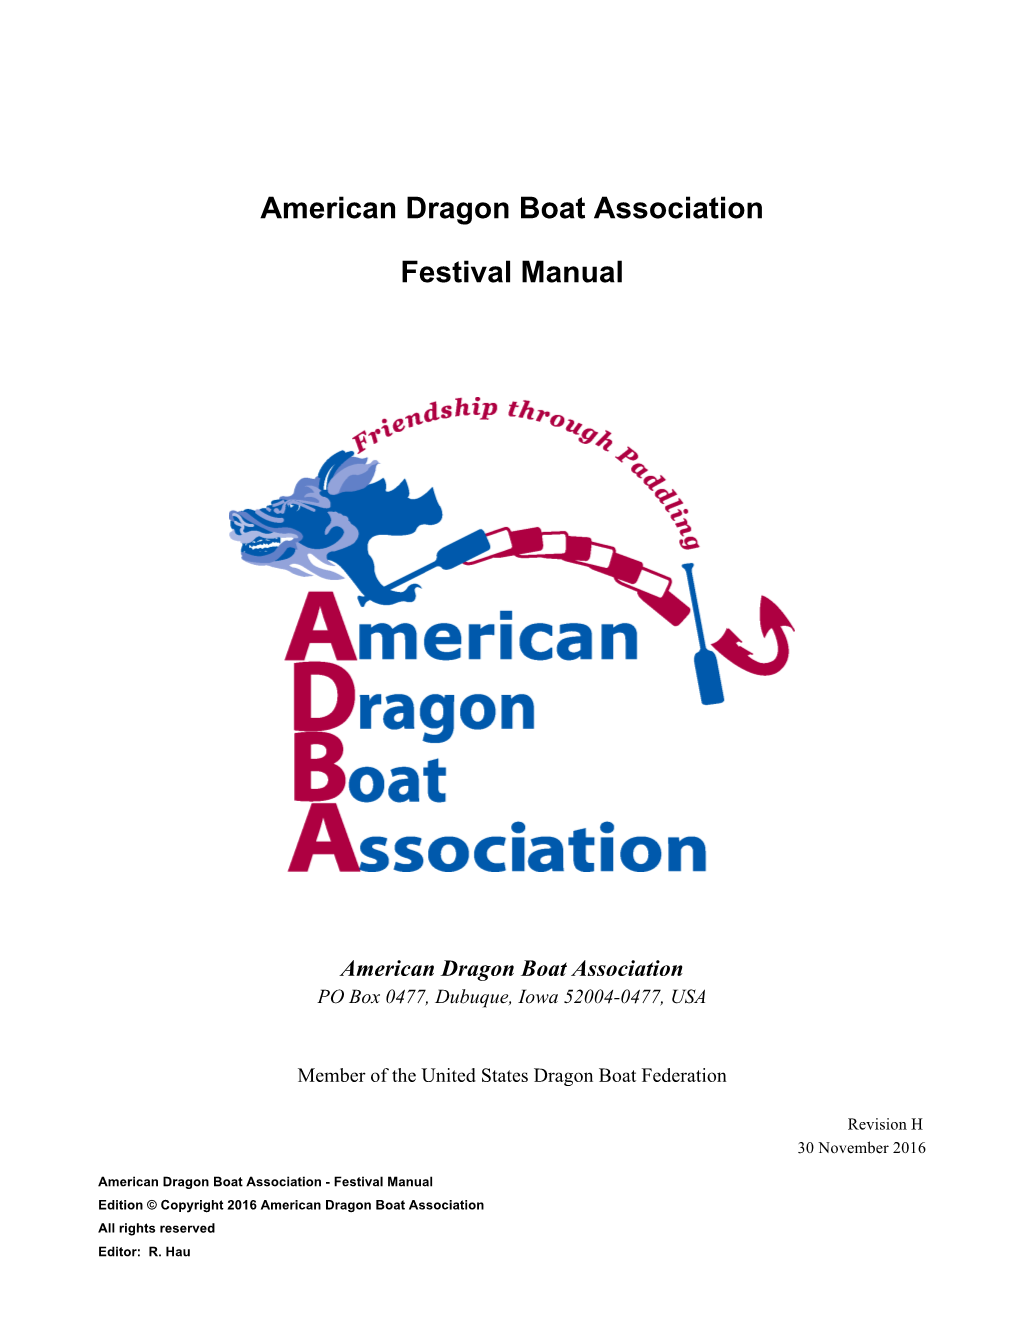 American Dragon Boat Association Festival Manual